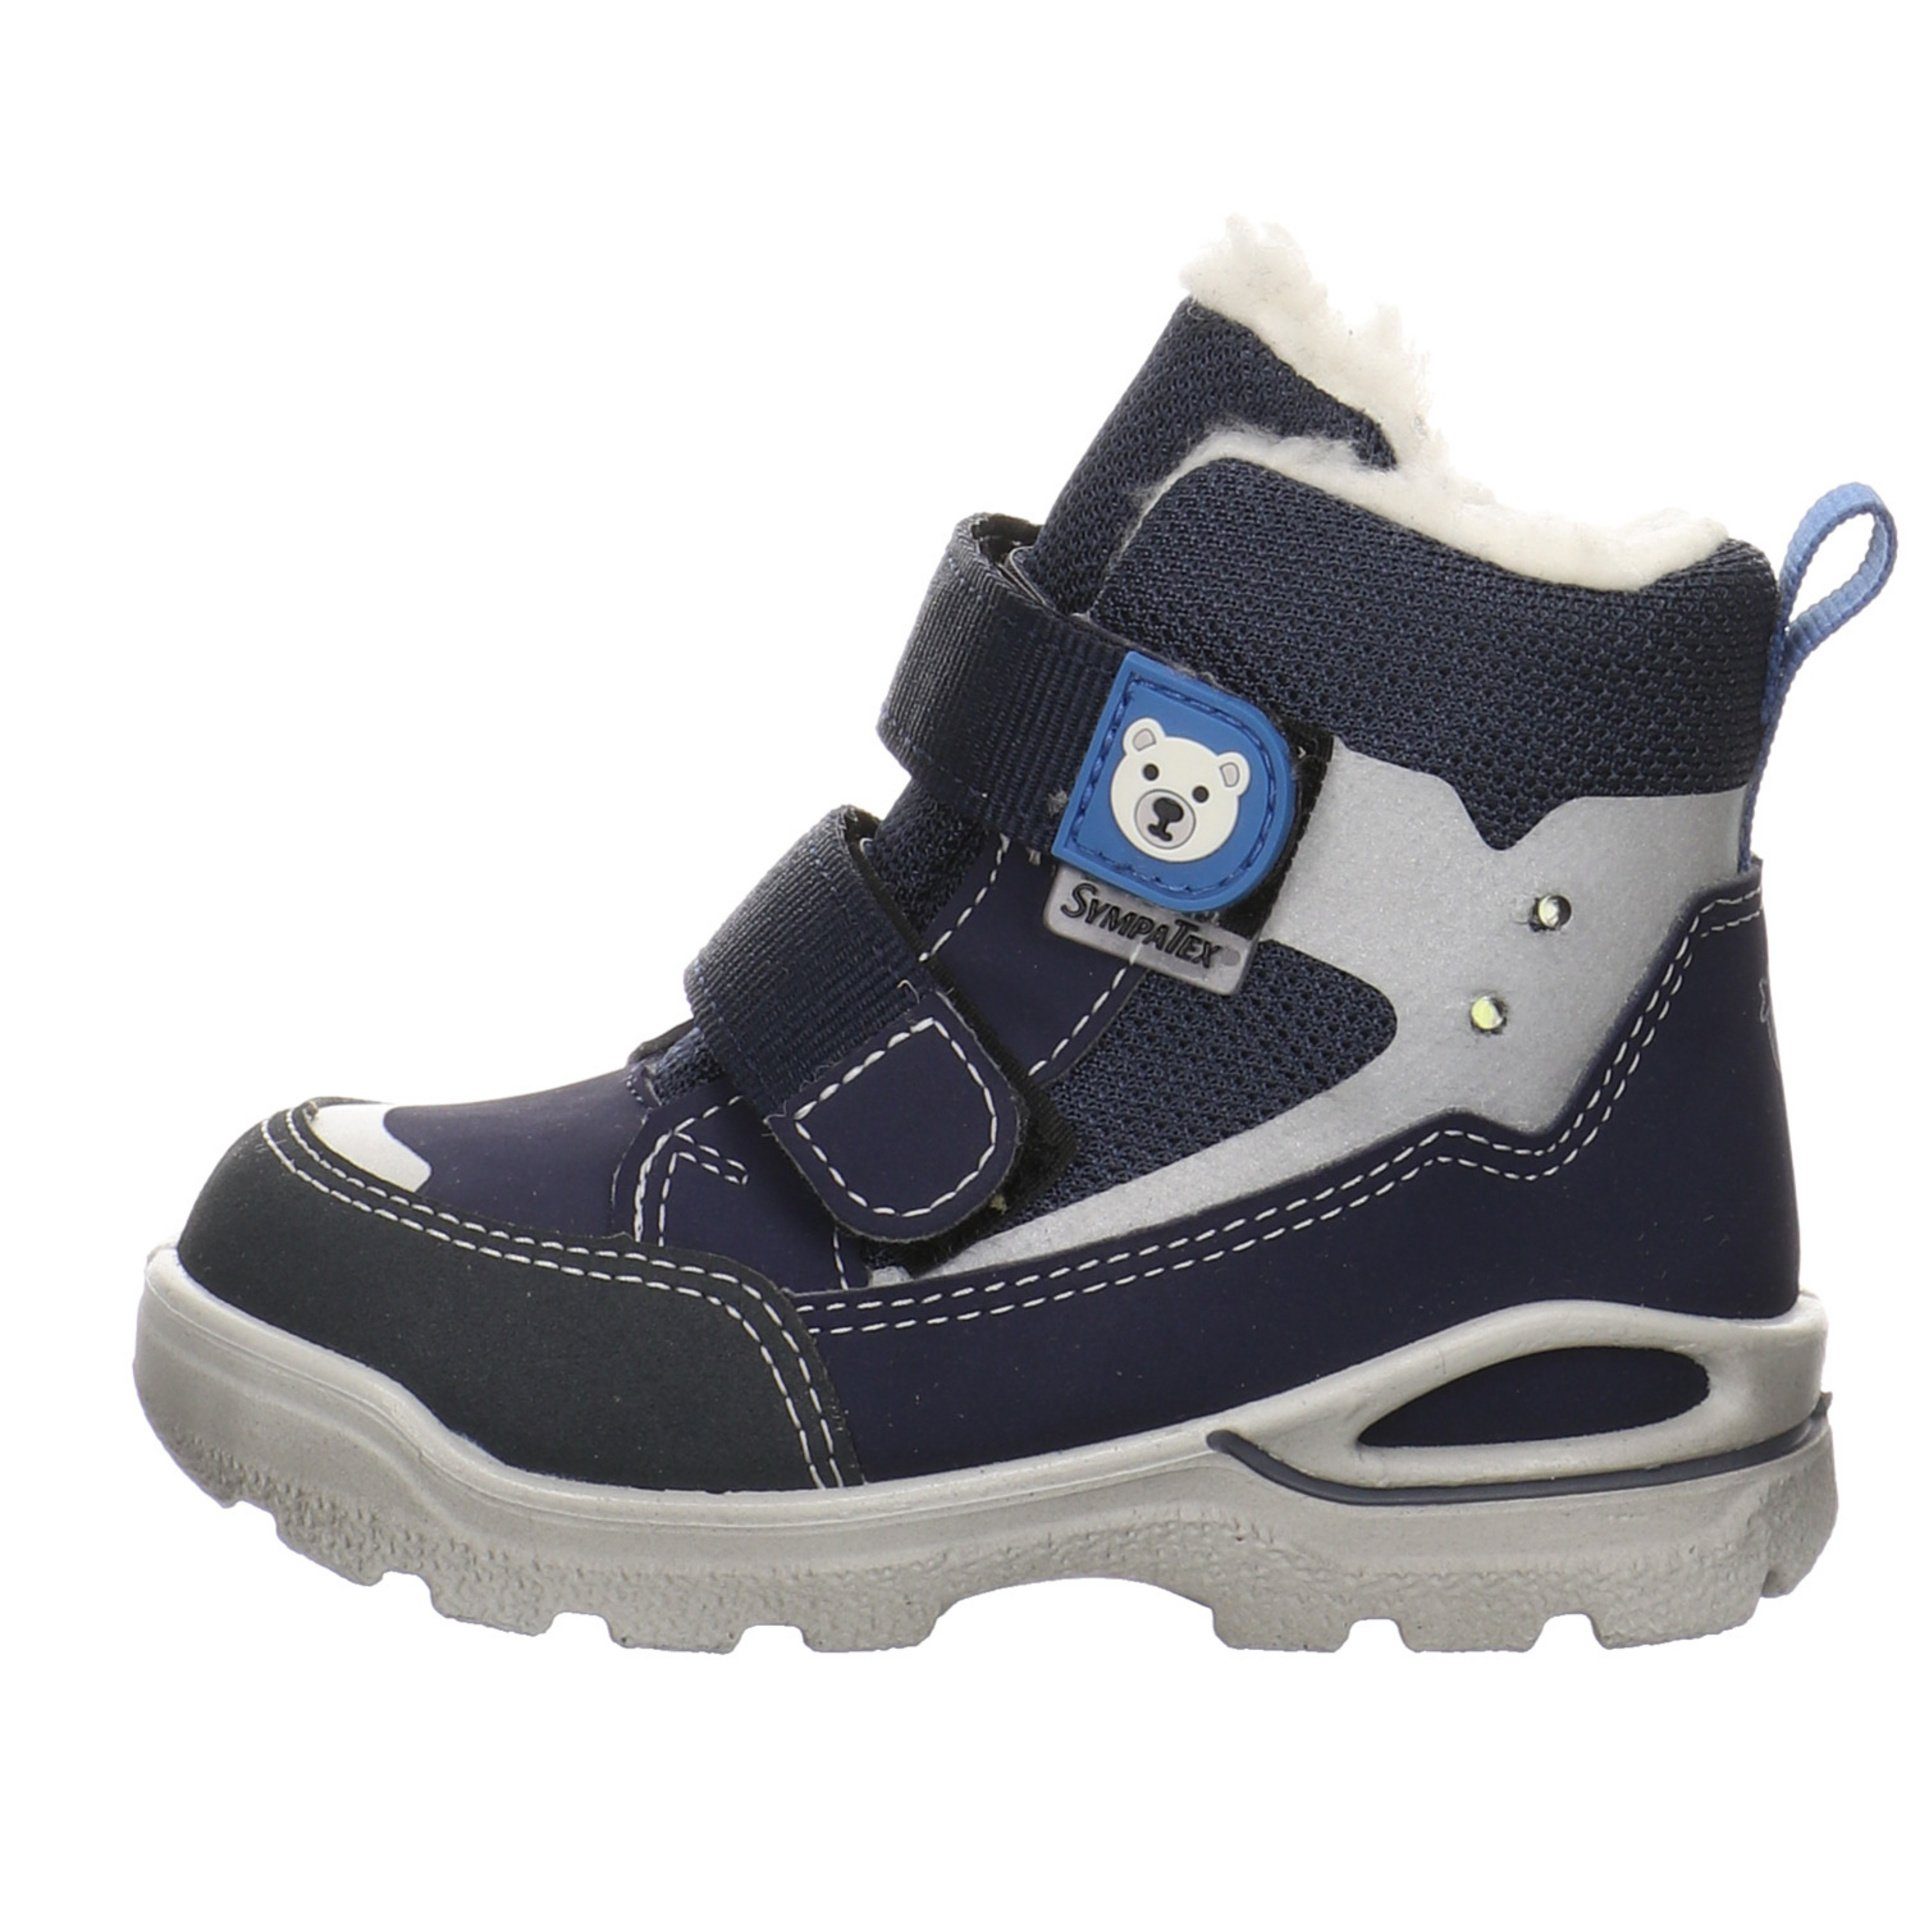 (170) Ricosta Boots Sneaker Kinderschuhe Synthetikkombination Schuhe Jungen Benno nautic/ozean Sneaker